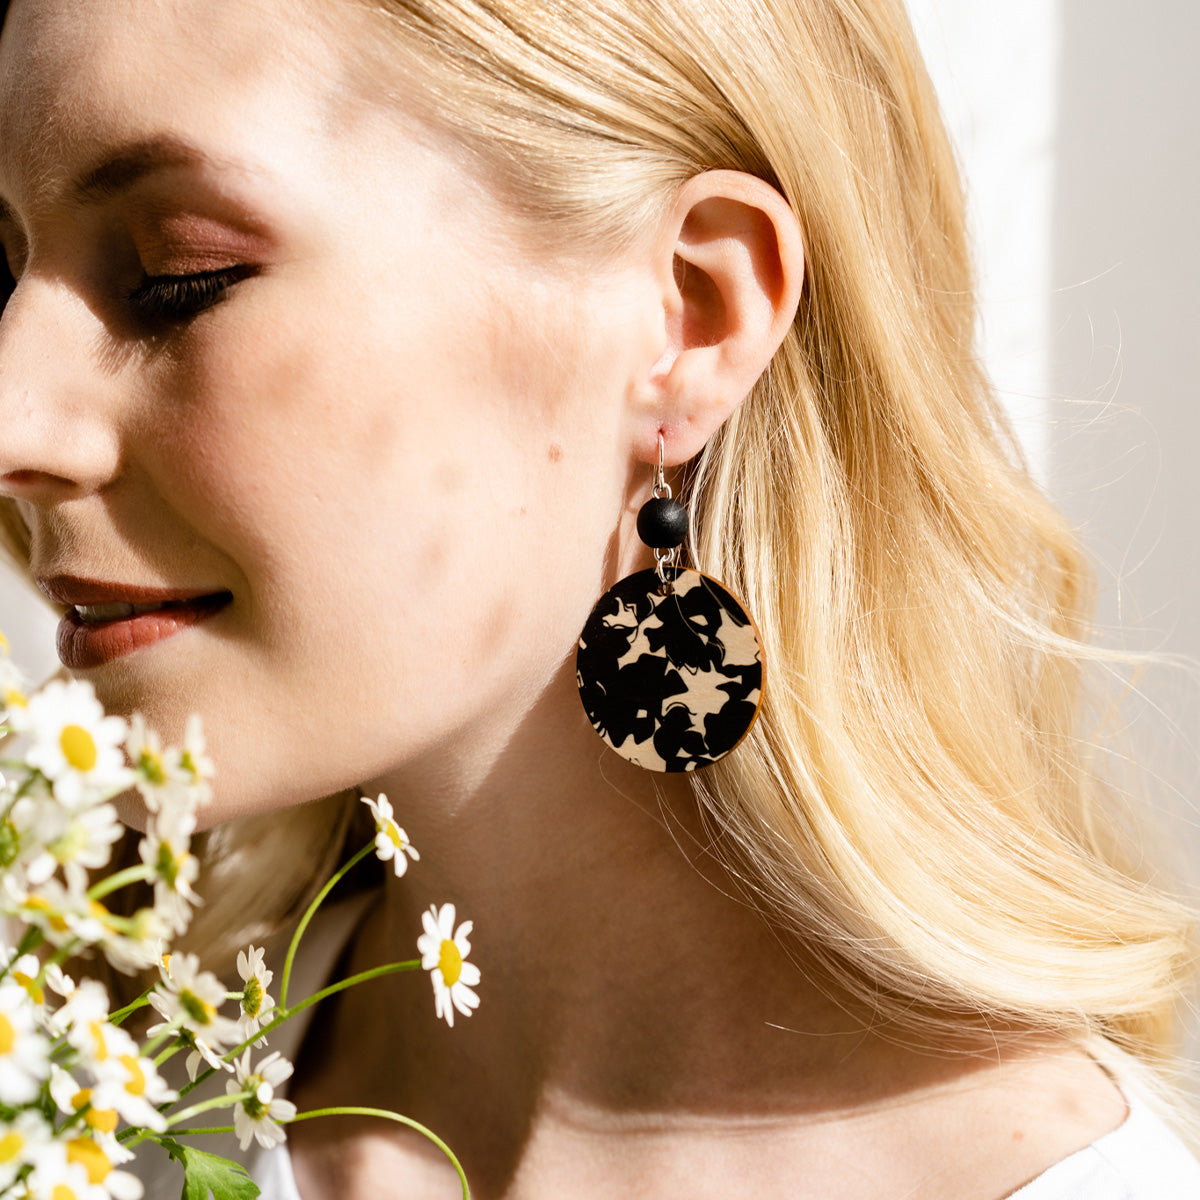 Karoliina earrings, black